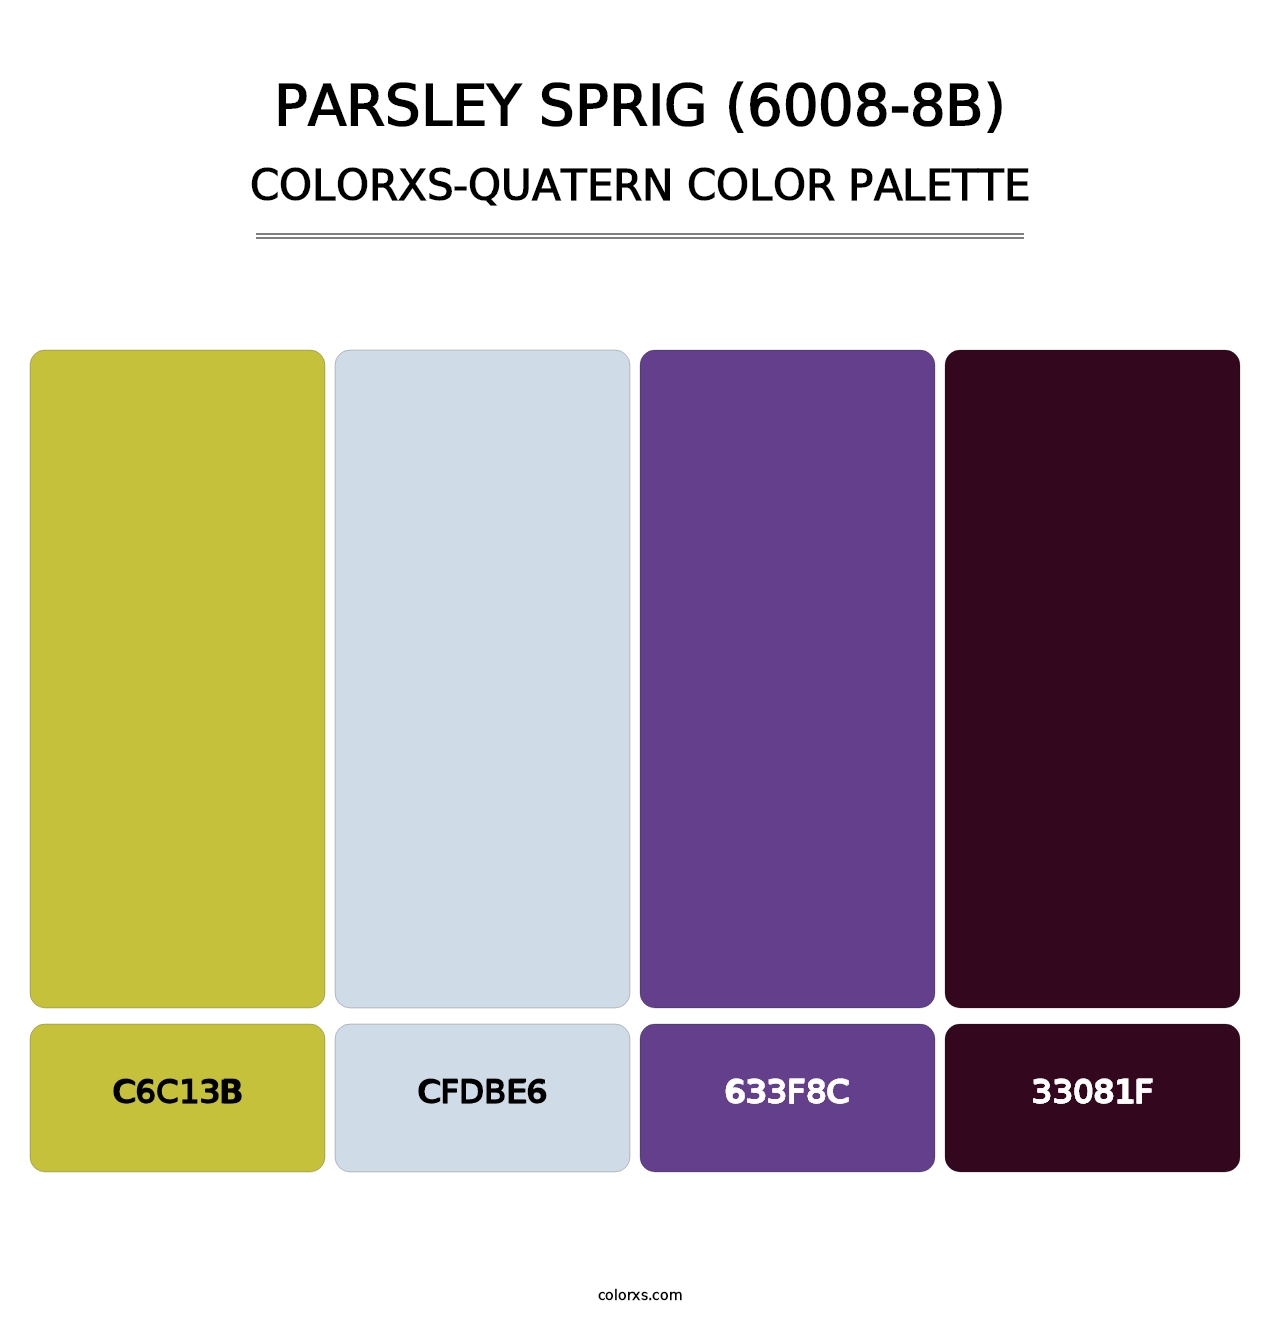 Parsley Sprig (6008-8B) - Colorxs Quatern Palette